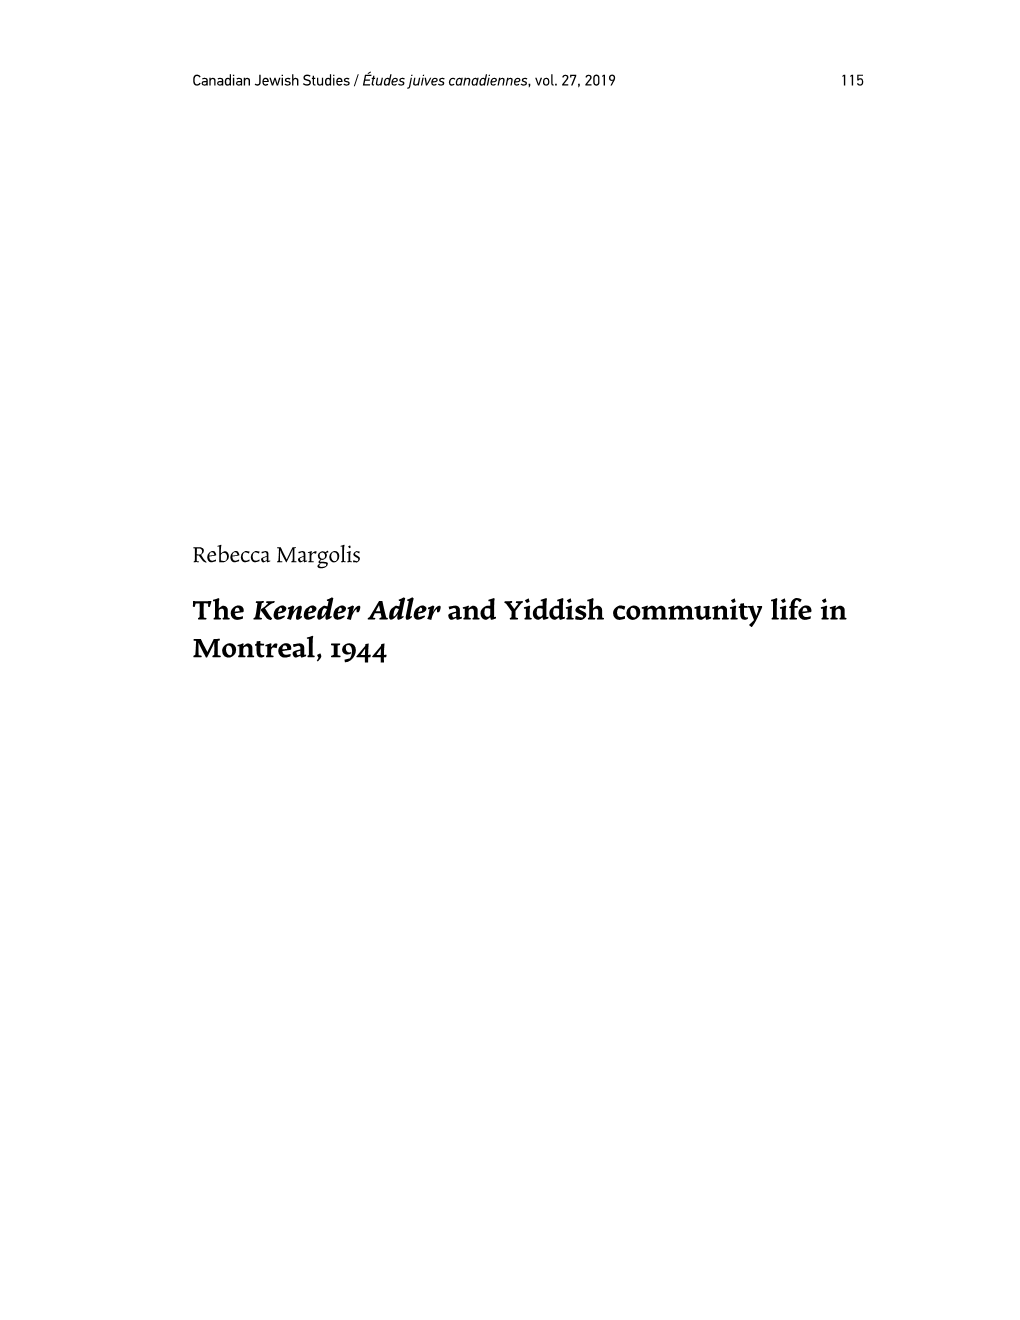 The Keneder Adler and Yiddish Community Life in Montreal, 1944 116 Rebecca Margolis / the Keneder Adler and Yiddish Community Life in Montreal, 1944